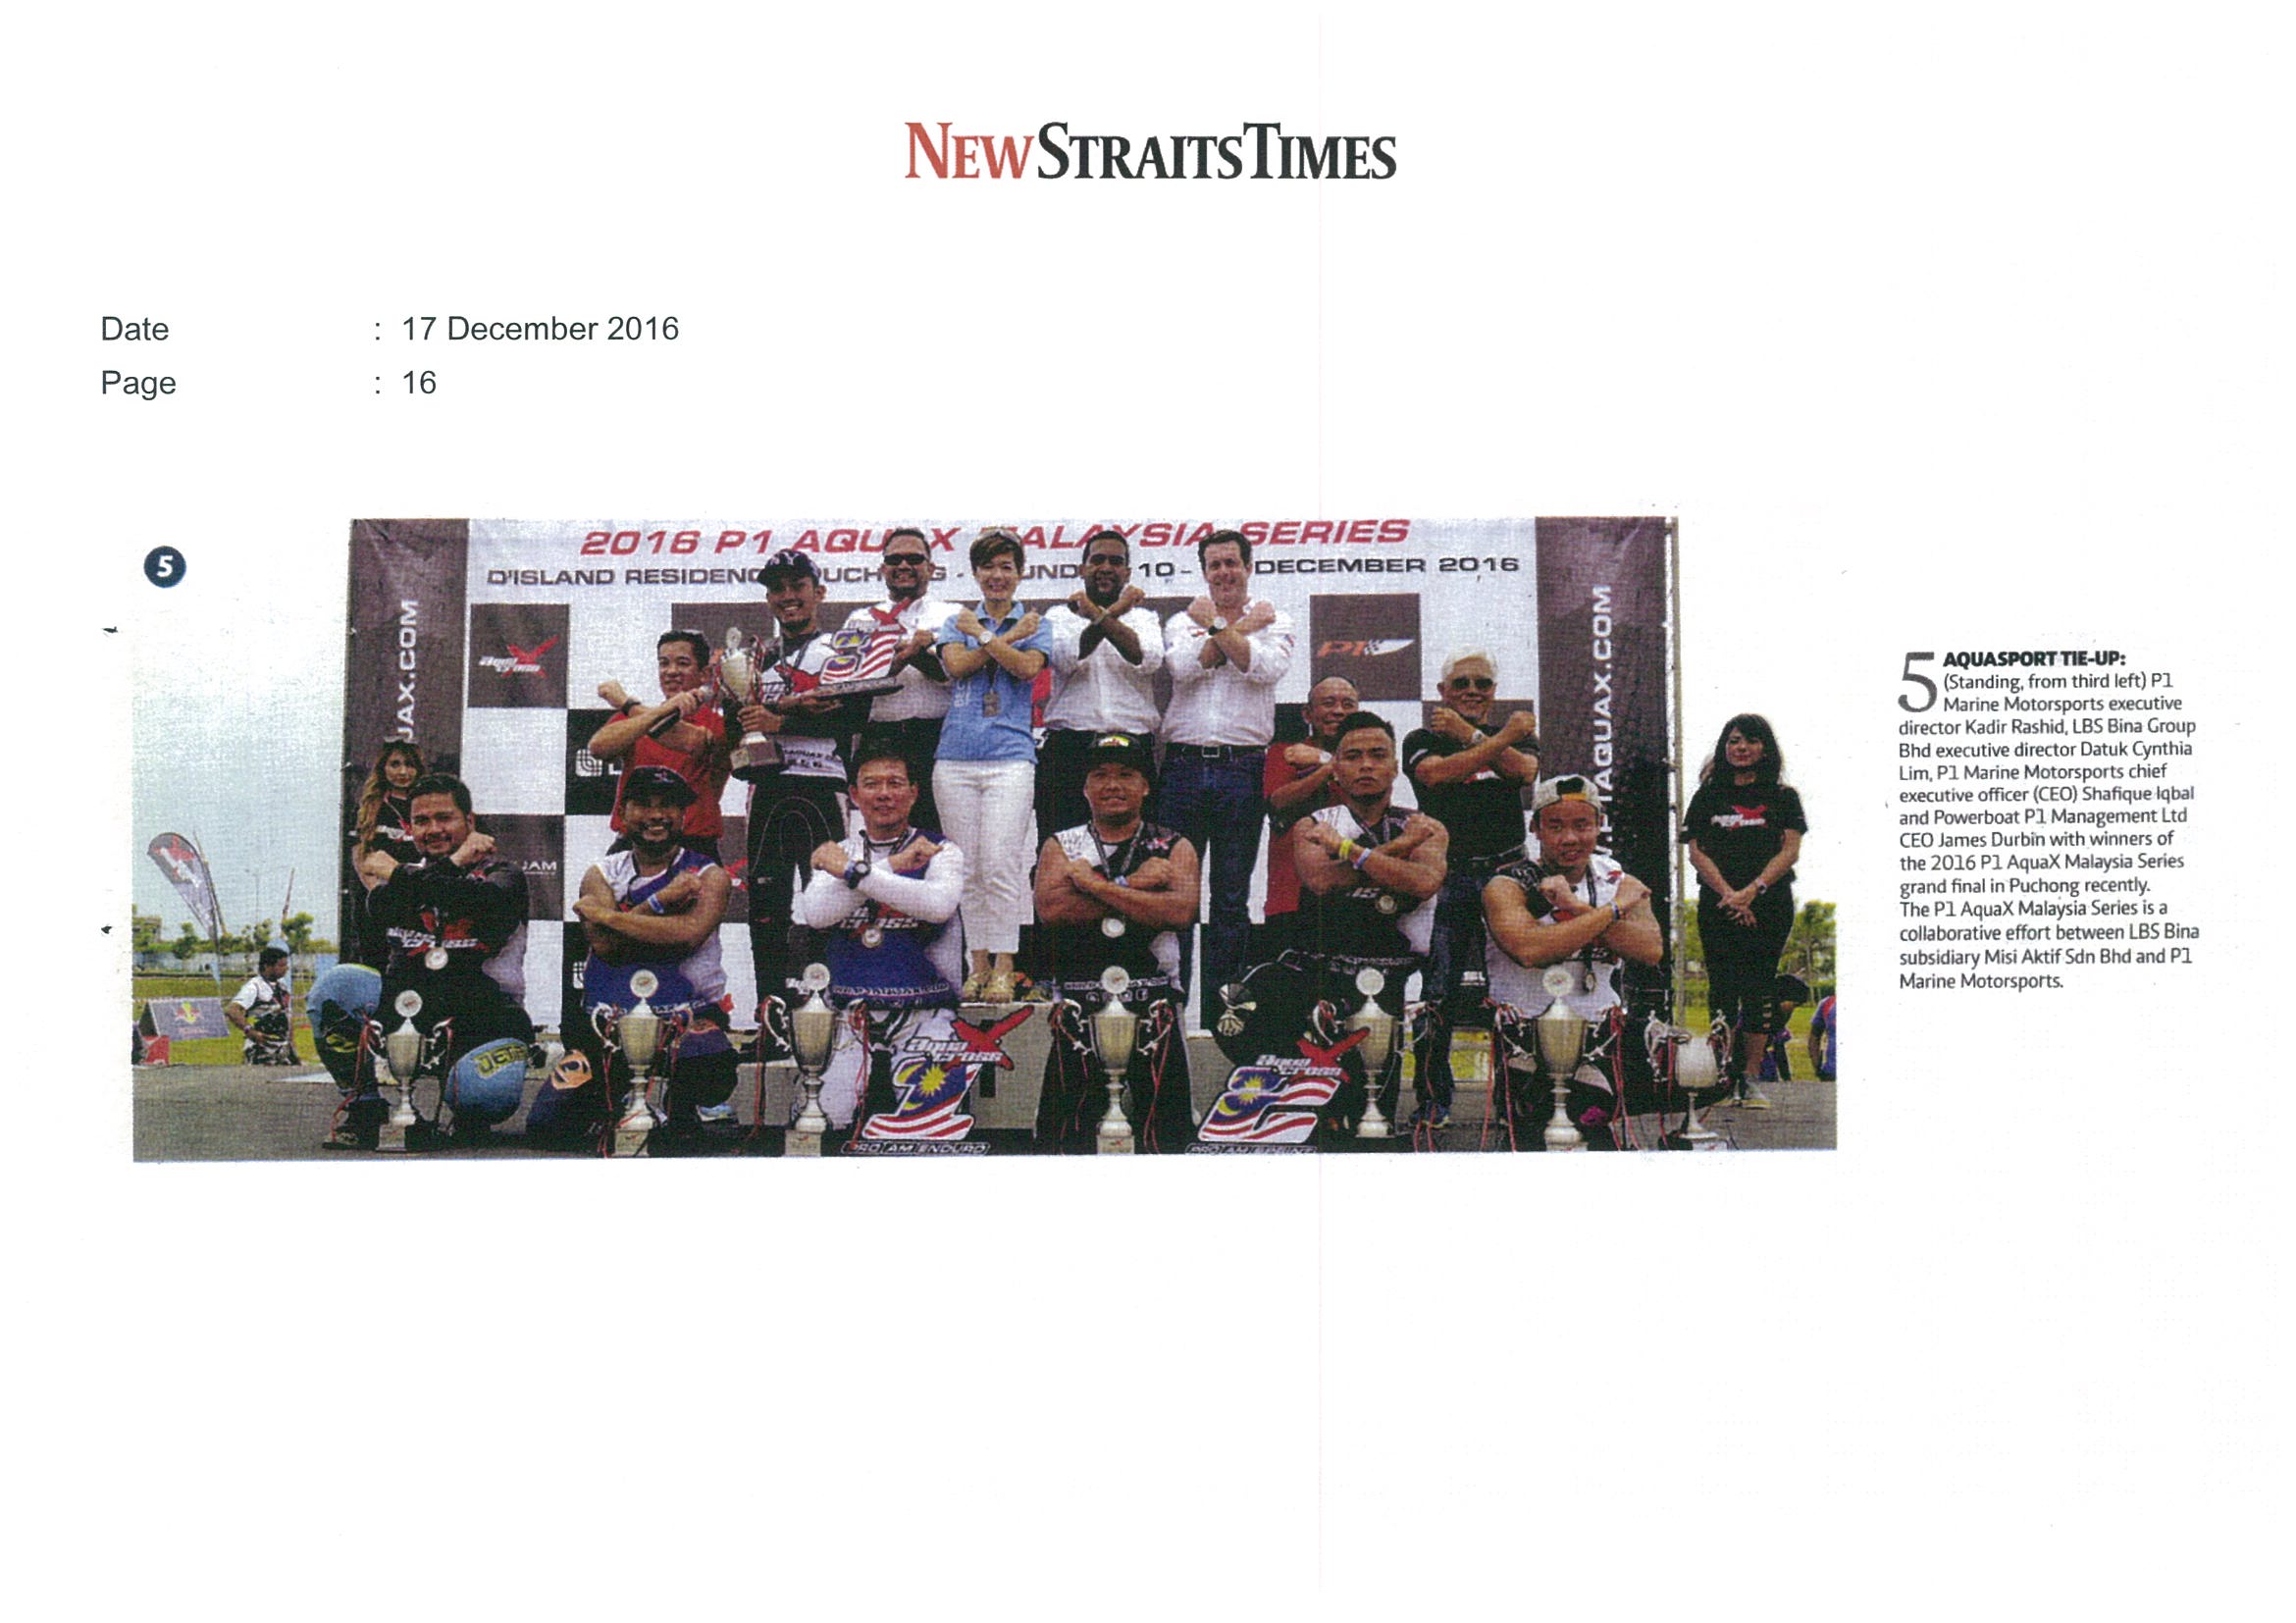 2016.12.17 New Straits Times – Aquasport tie up